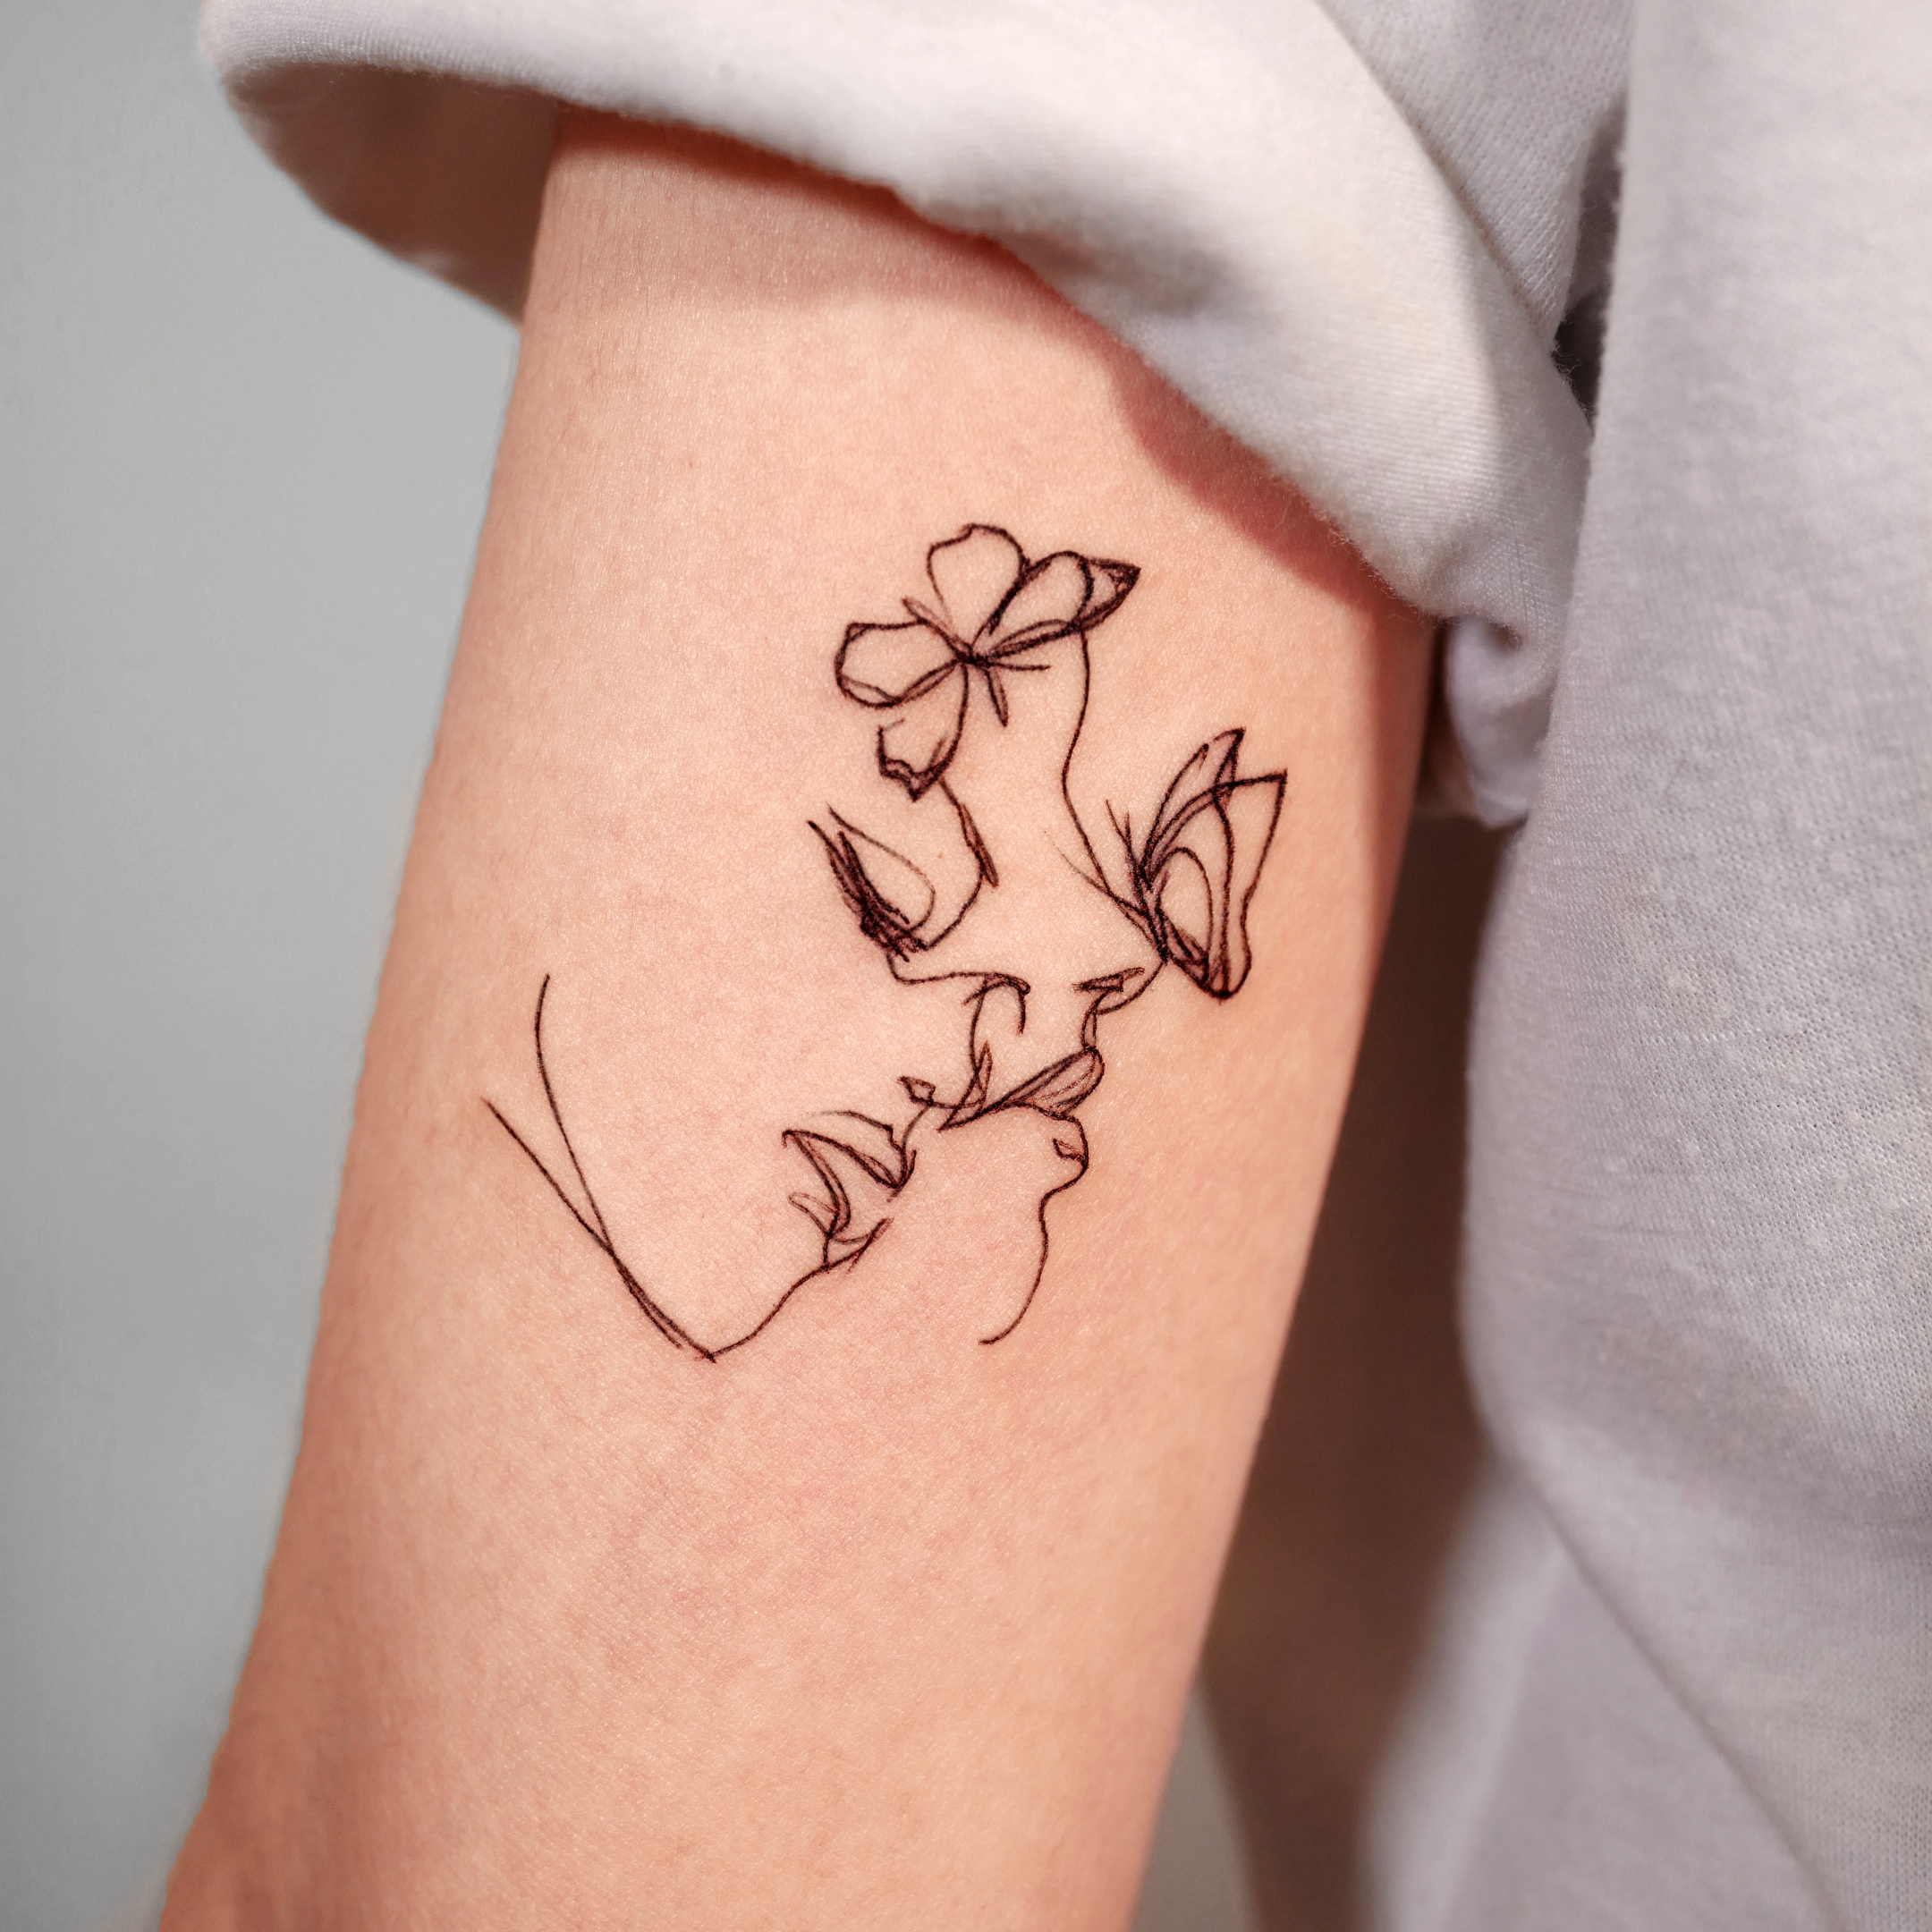 Lip's Ink Tattoo - Aguja y dedal Un placer como siempre Andrea! Hecho  por Ana. #inkciales #initials #aguja #needle #dedal #thimble #costura  #sewing #love #linea #line #minimal #detalle #detail #lineworktattoo #art  #tattoart #